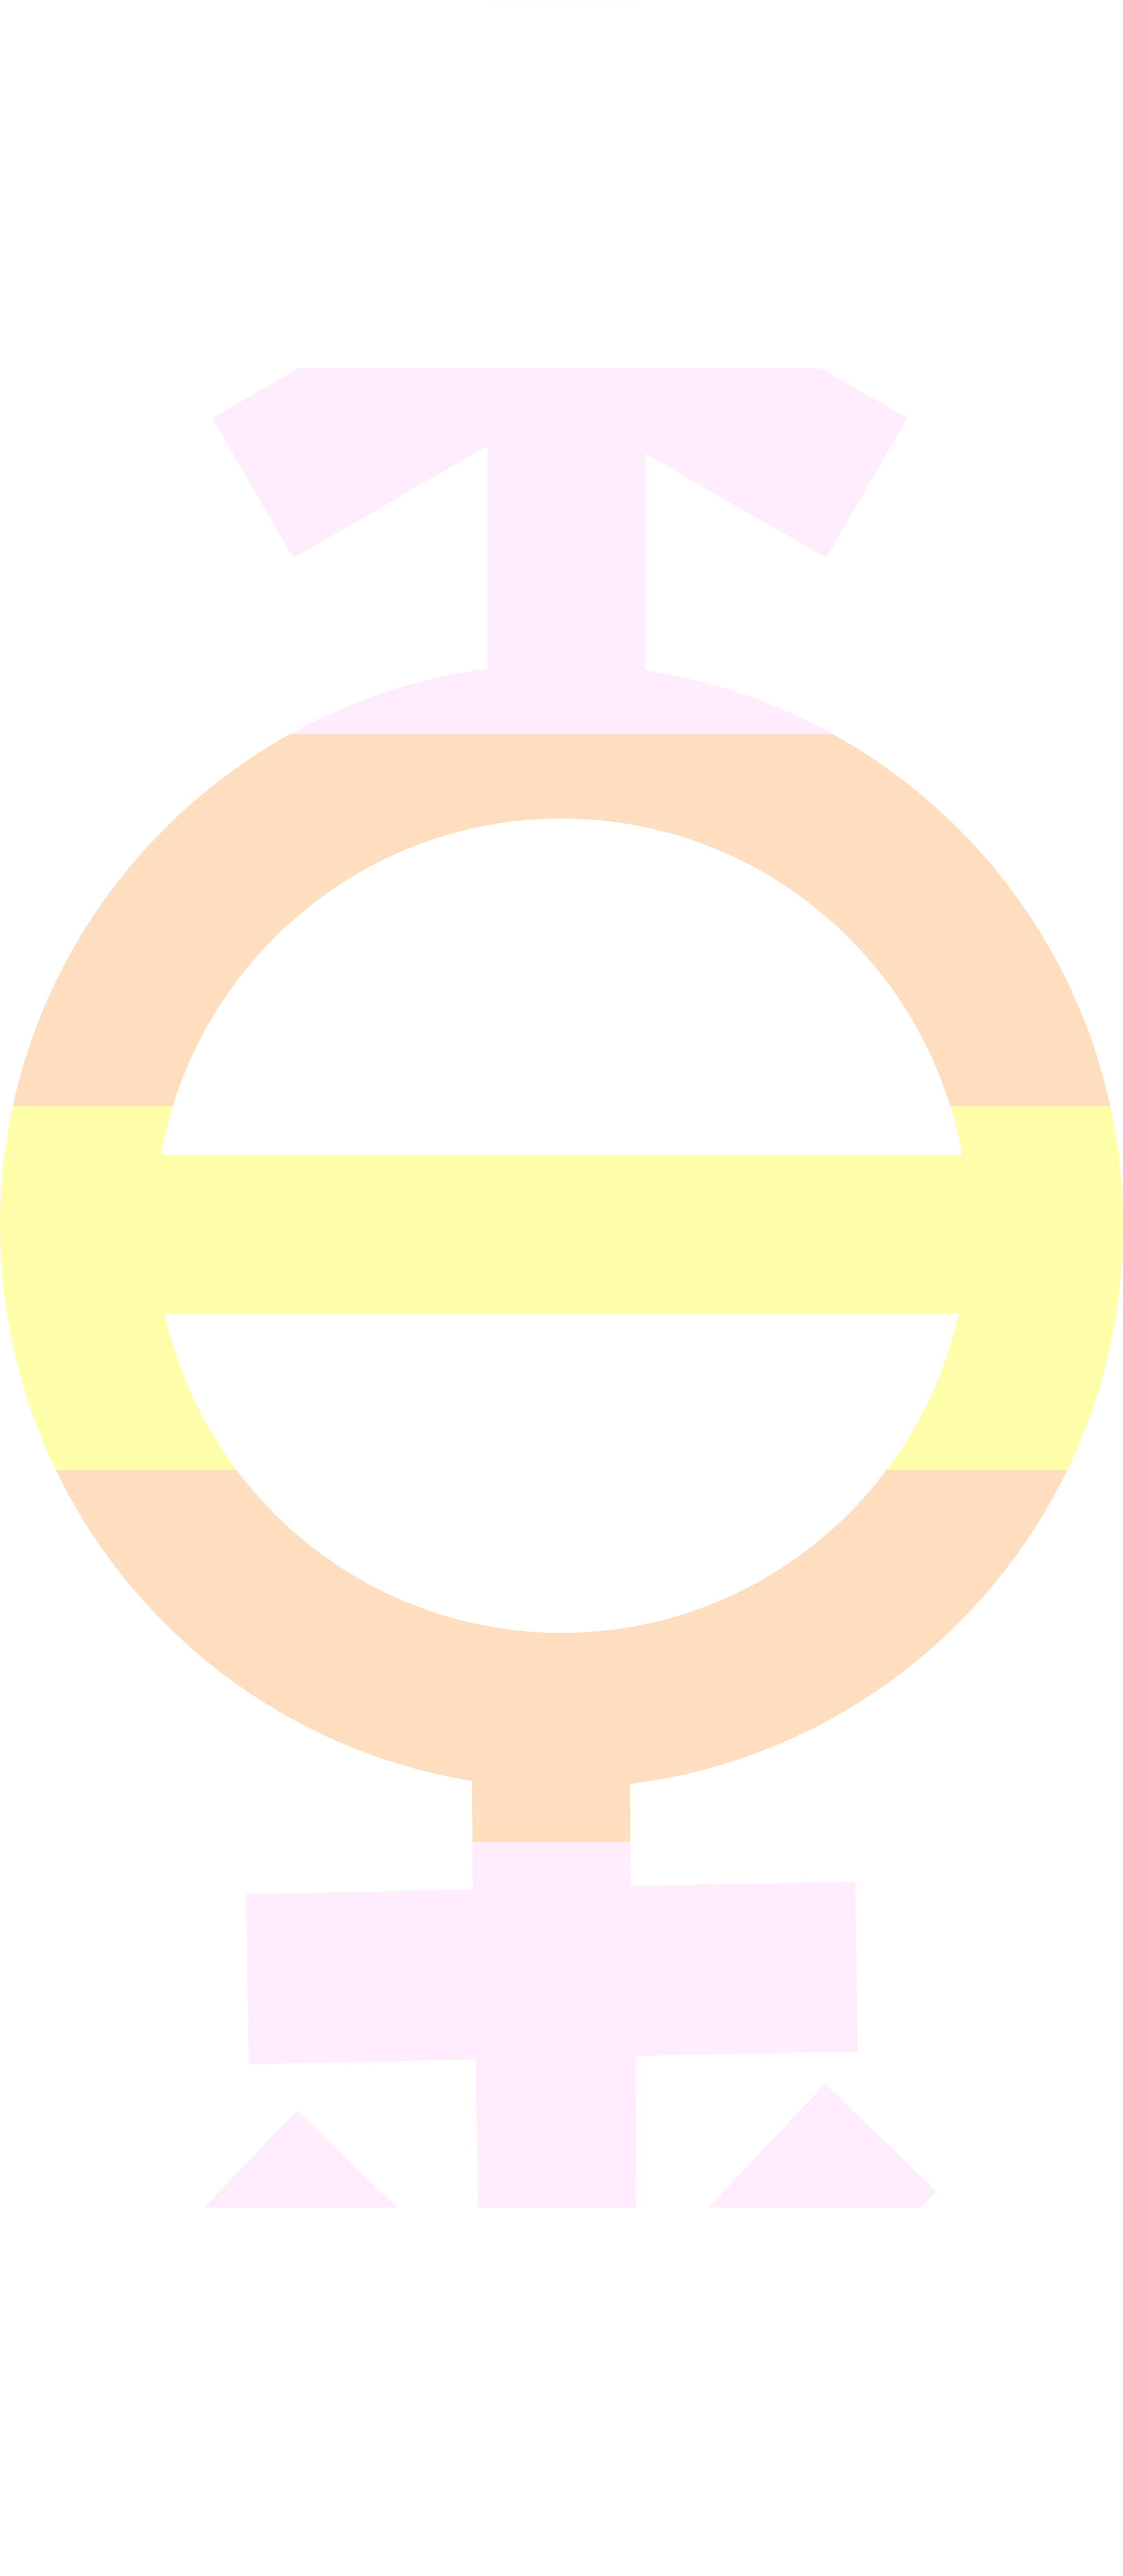 Pangender Symbol By Pride Flags On Deviantart Rh Deviantart - Pangender Symbol (2179x5000)